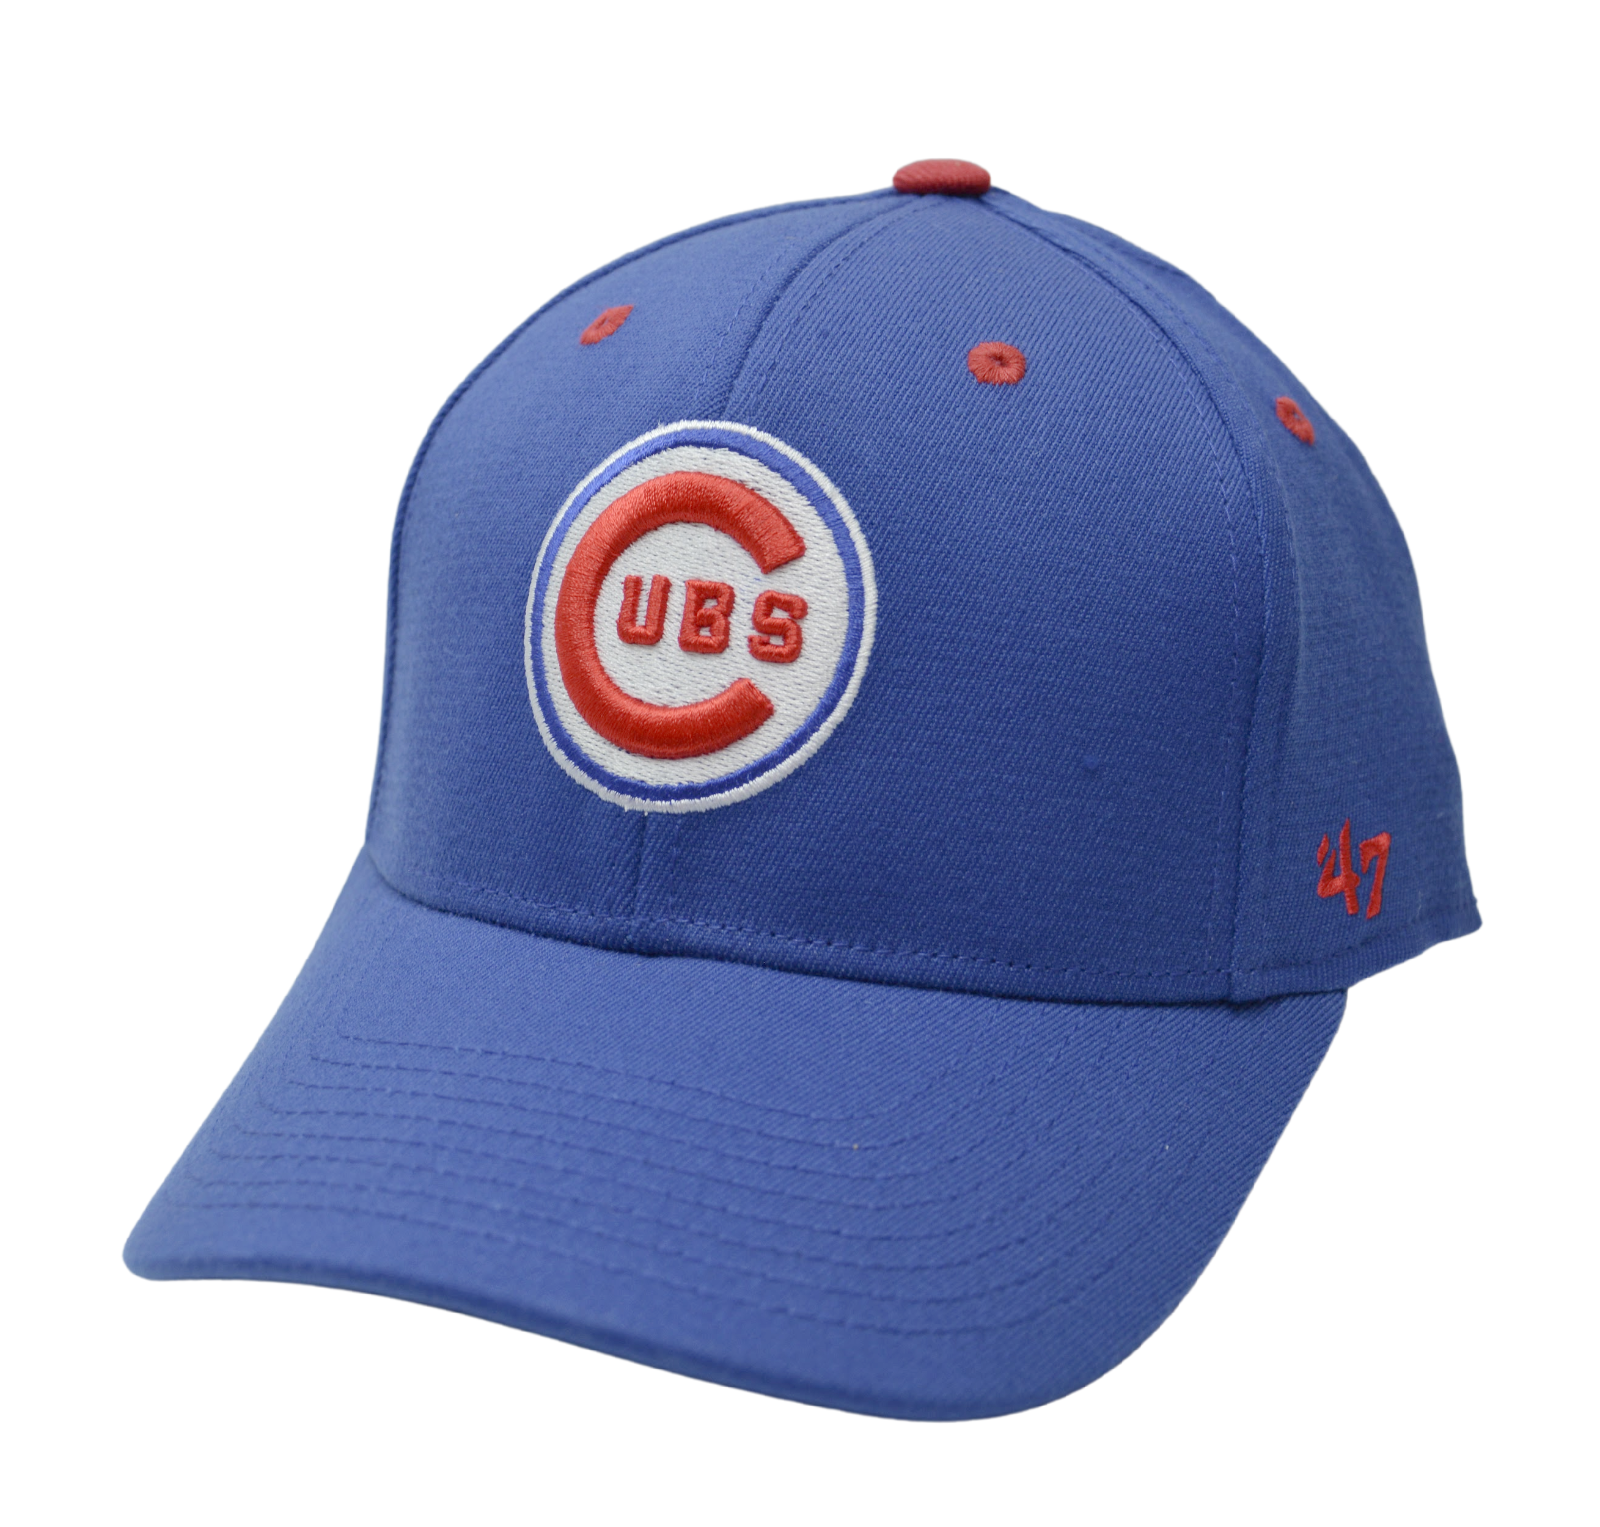 Primary image for '47 Chicago Cubs MLB Royal Blue 47 Contender Flex Fit Hat Baseball Cap